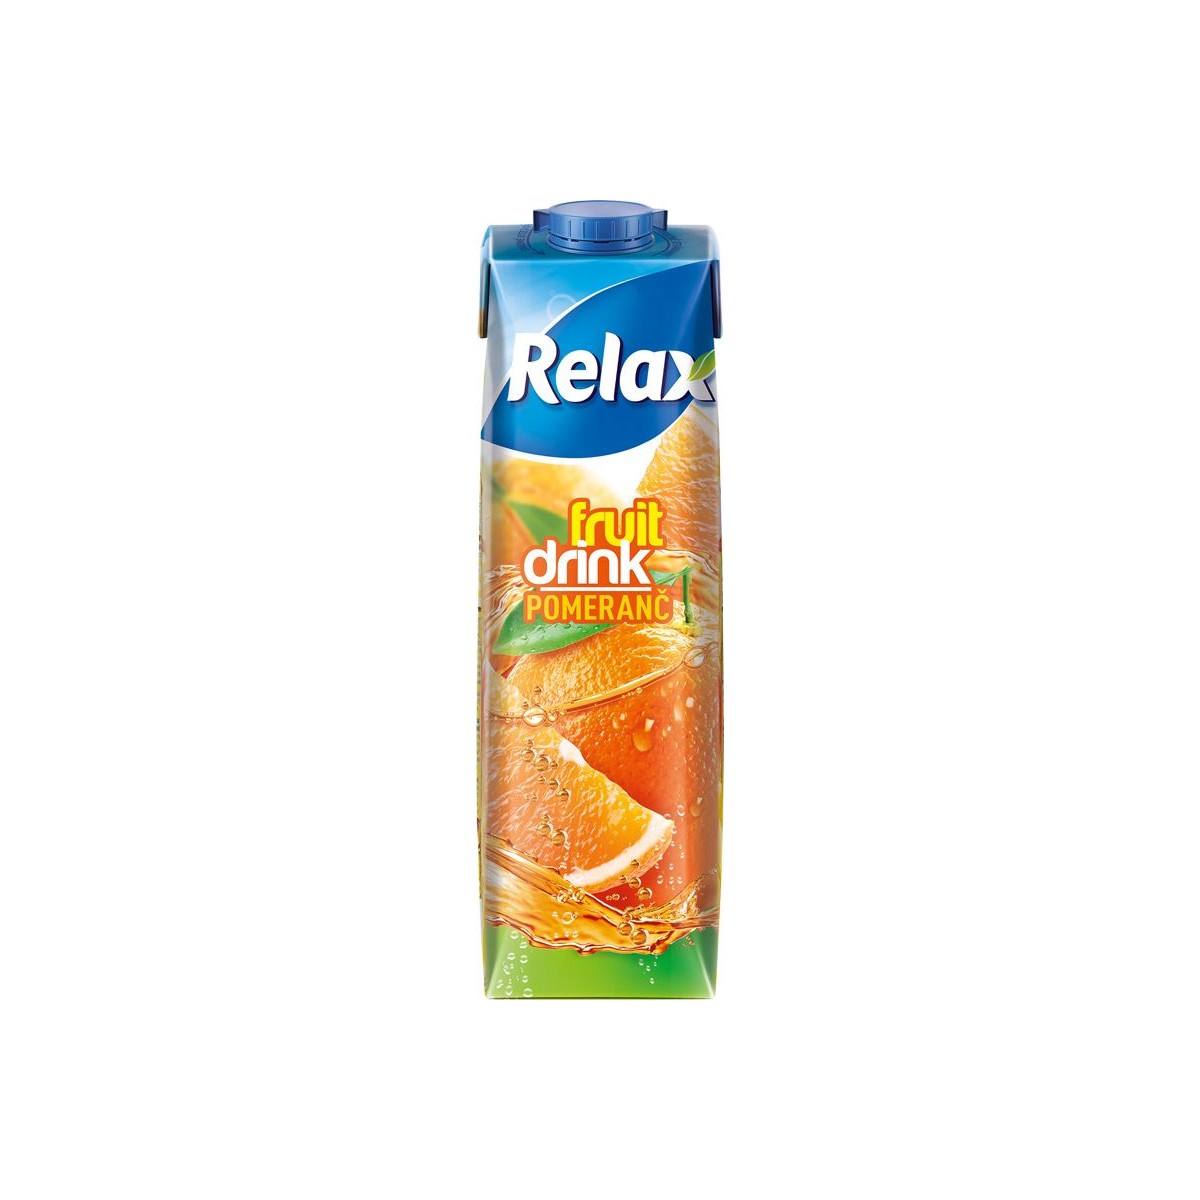 Relax Fruit drink Pomeranč 1l